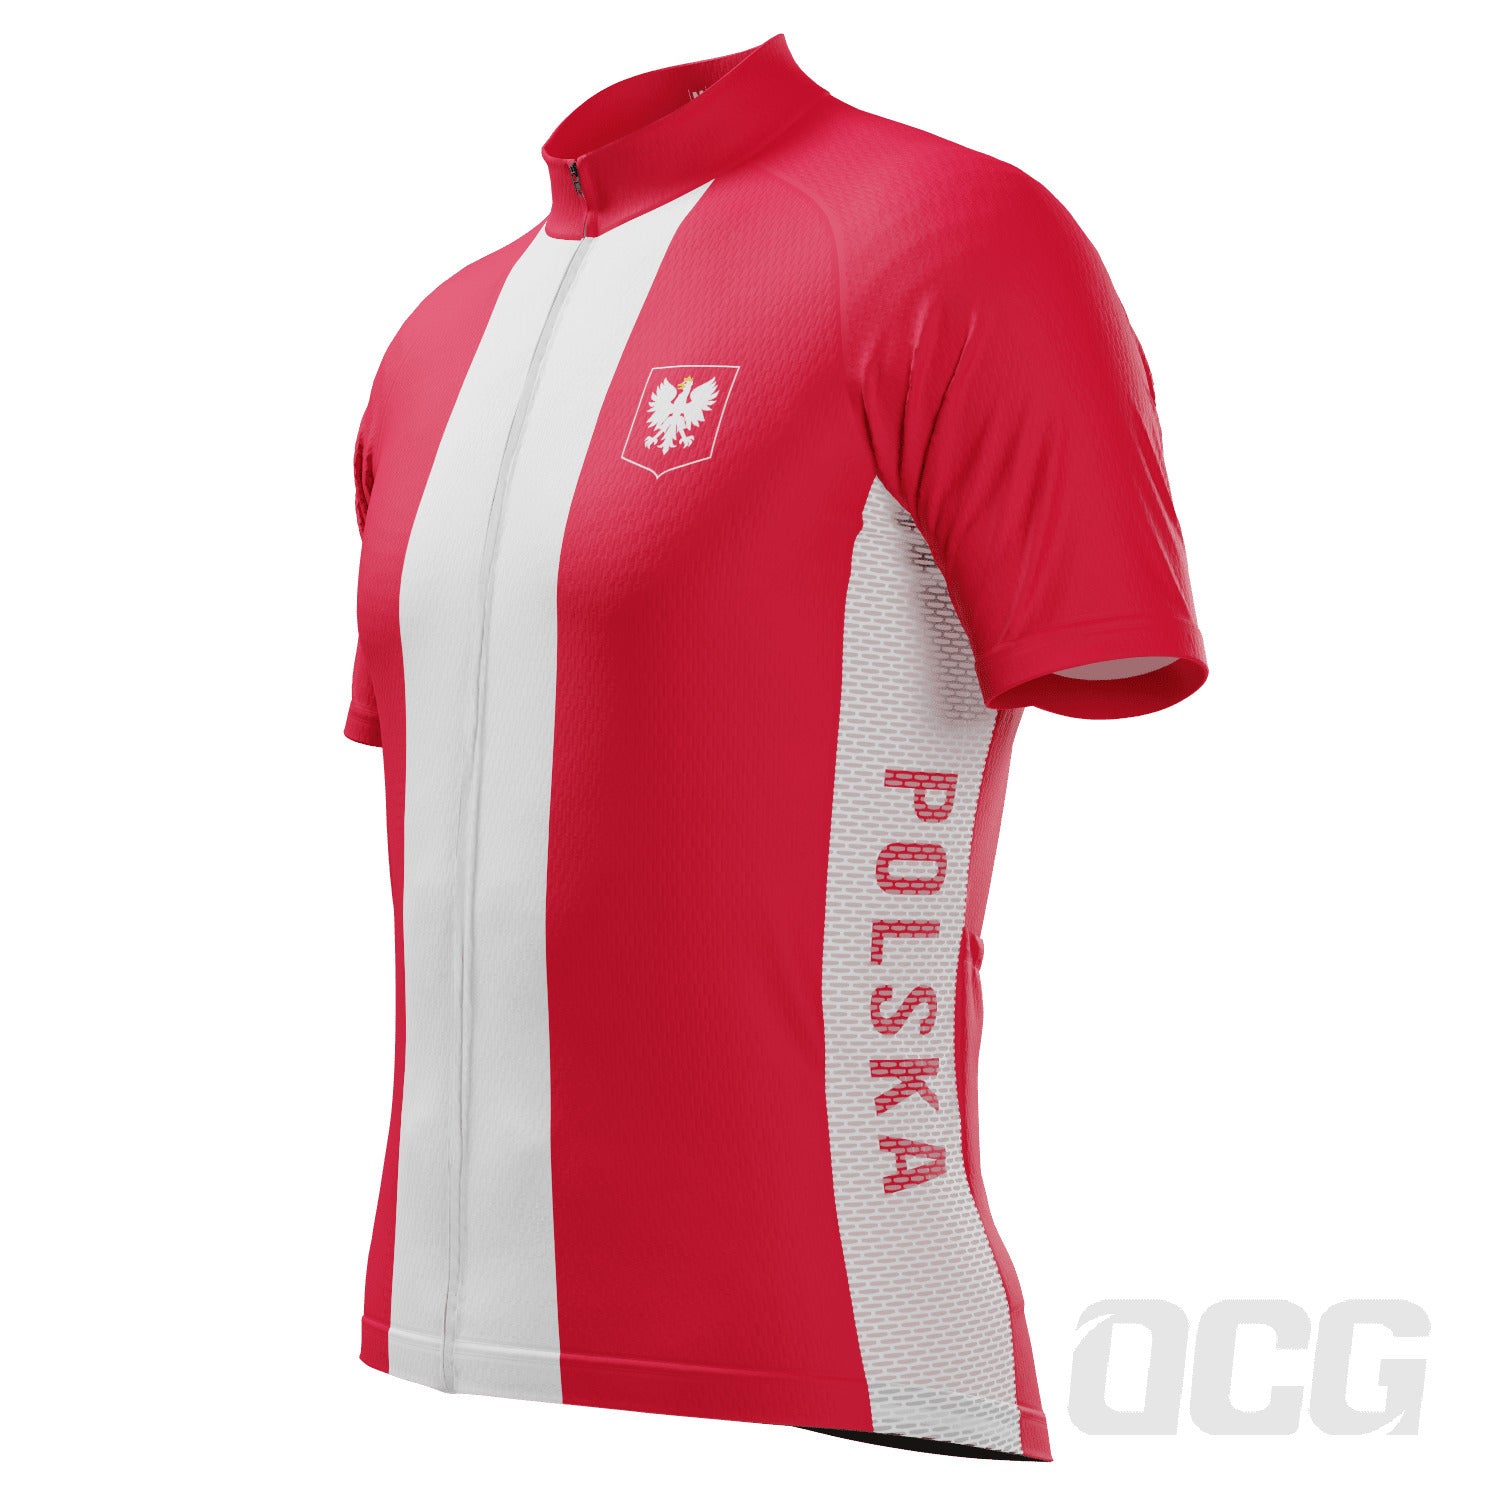 Men's Poland Polska National Flag Short Sleeve Cycling Jersey